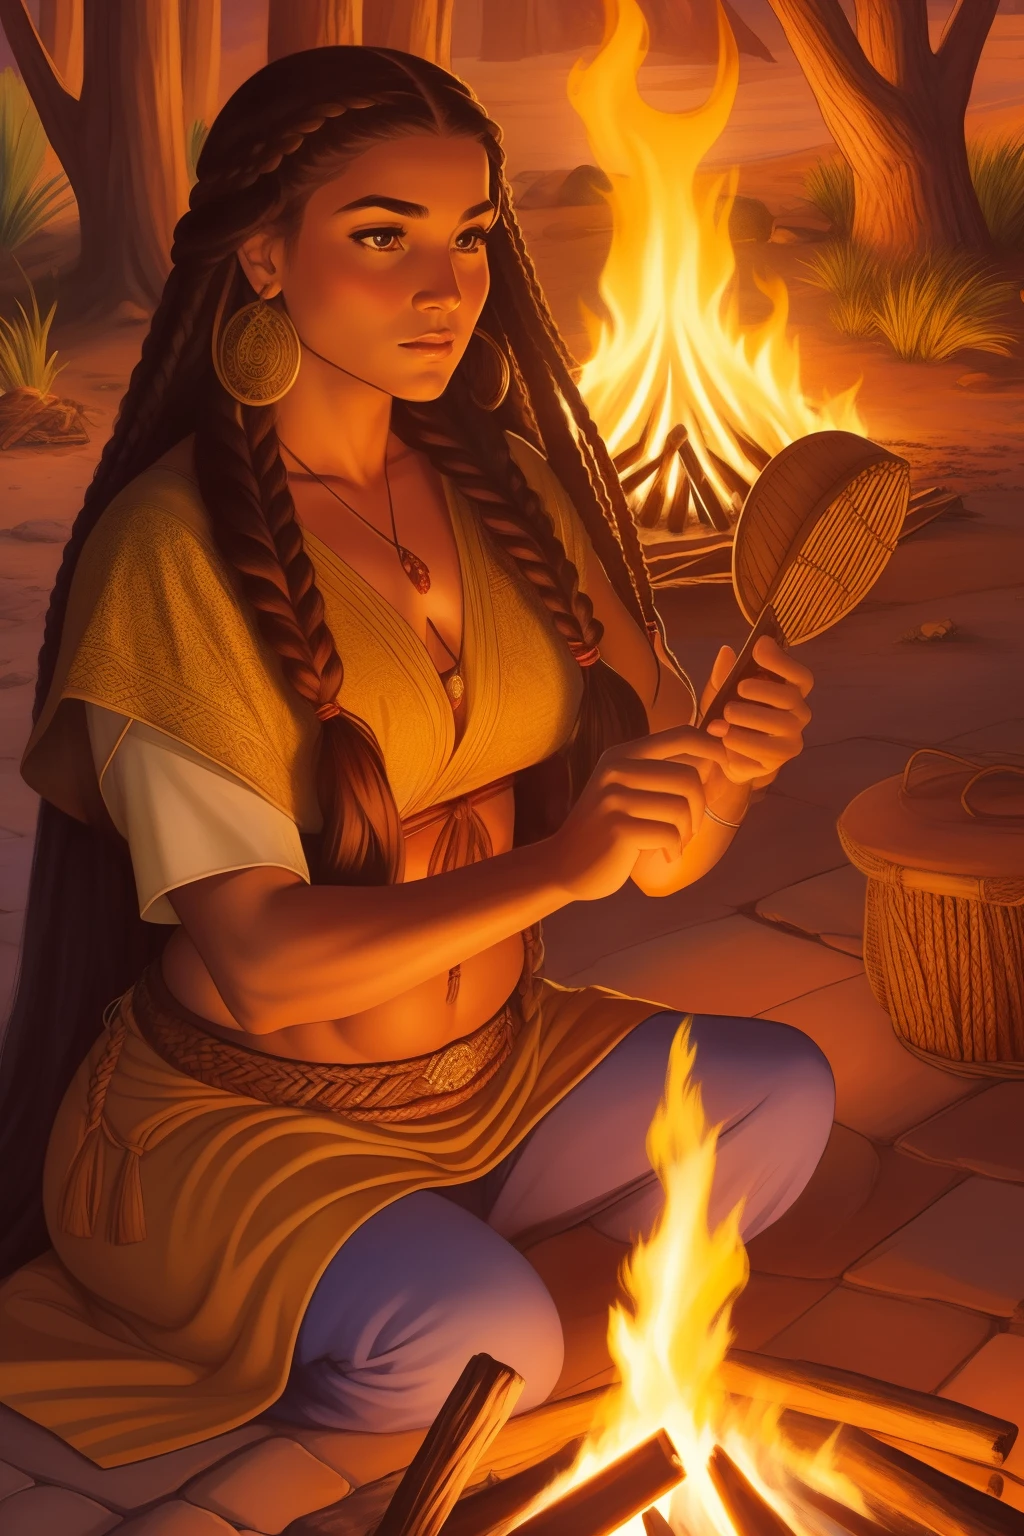 (SFW)约翰·布西马 (John Buscema) 的最佳风格, 一位留着长辫子的漂亮阿帕奇族妇女, 偷偷看, 不羁的美丽, 穿着他们部落的传统服装, 在篝火旁, 热身, 完美的场景, 详细的艺术 (SFW)